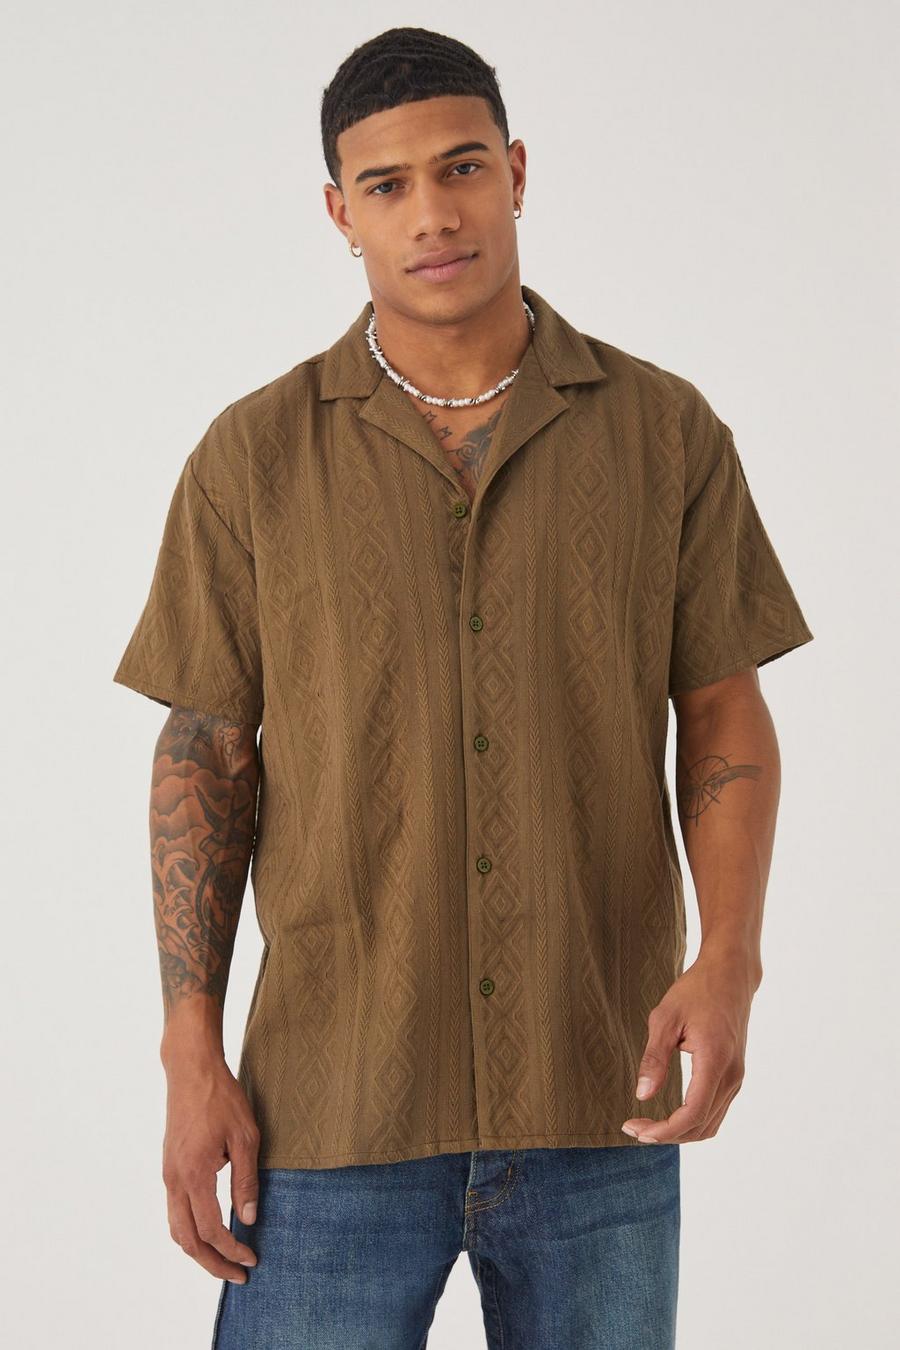 Khaki Oversize kortärmad skjorta i aztecstil